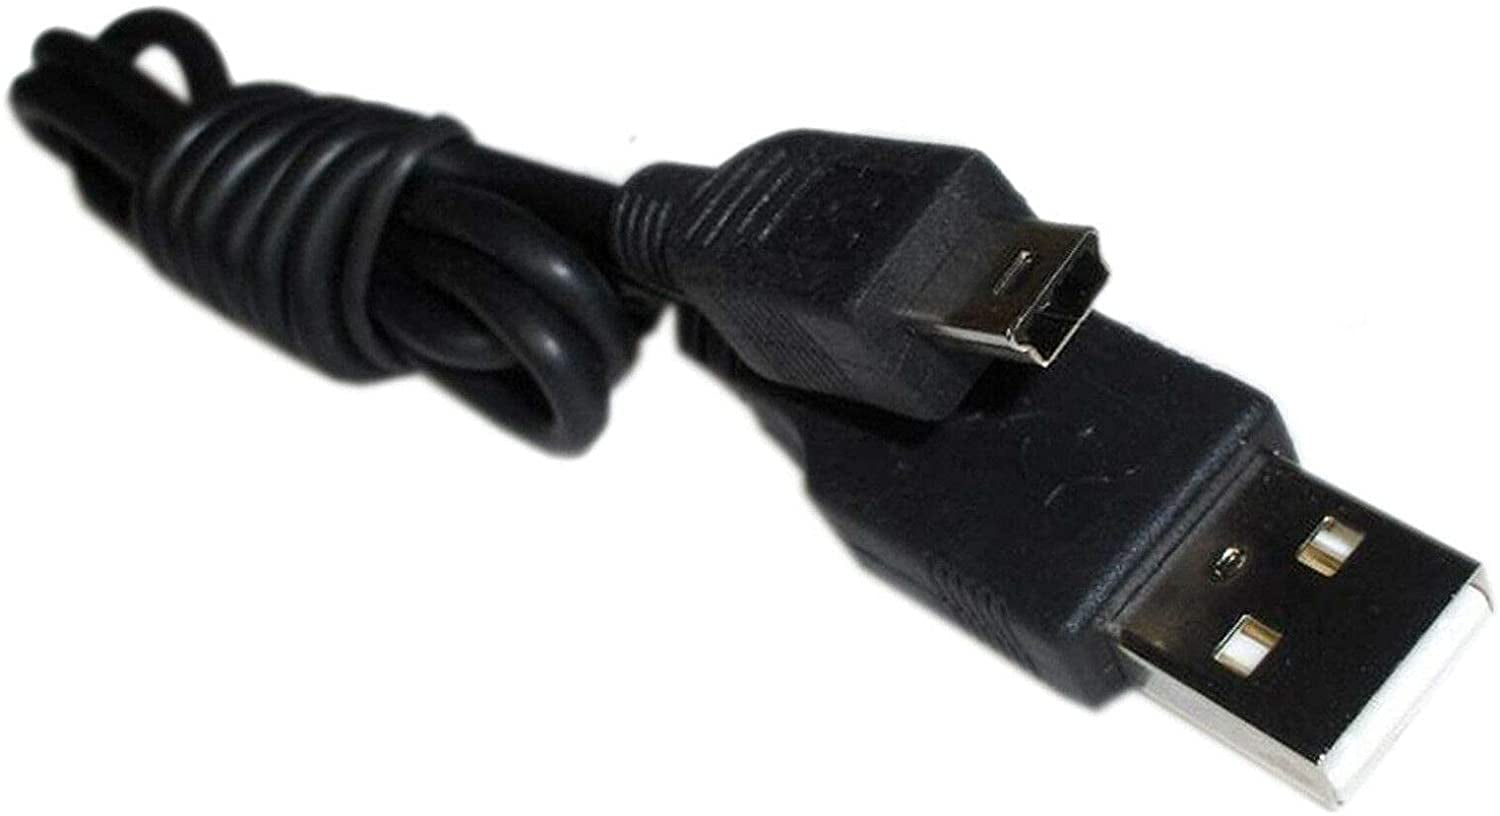 Black Samsung AD39-00169A USB Cable 